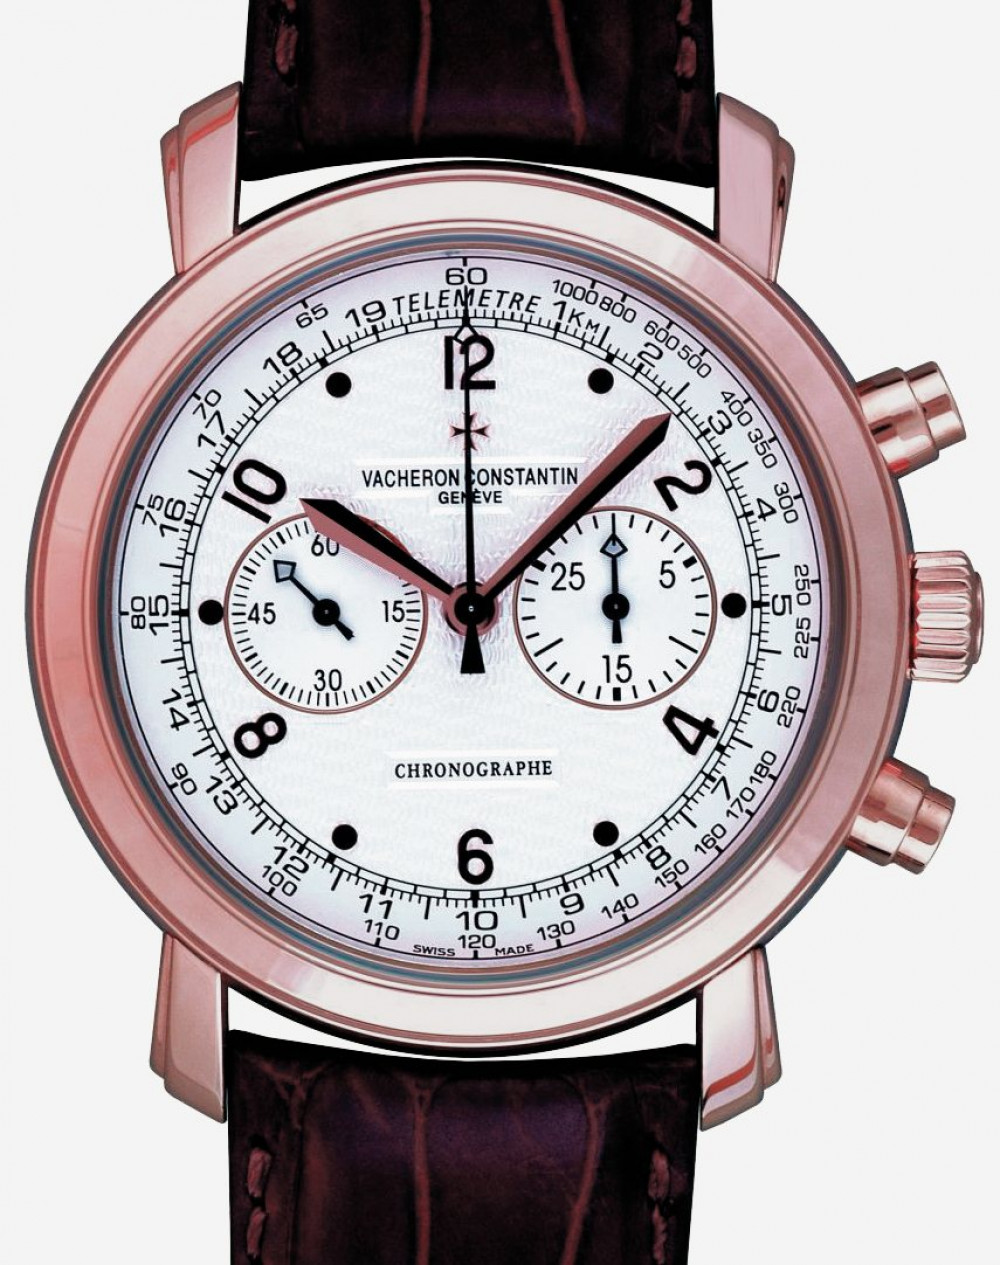 Zegarek firmy Vacheron Constantin, model Chronograph Date